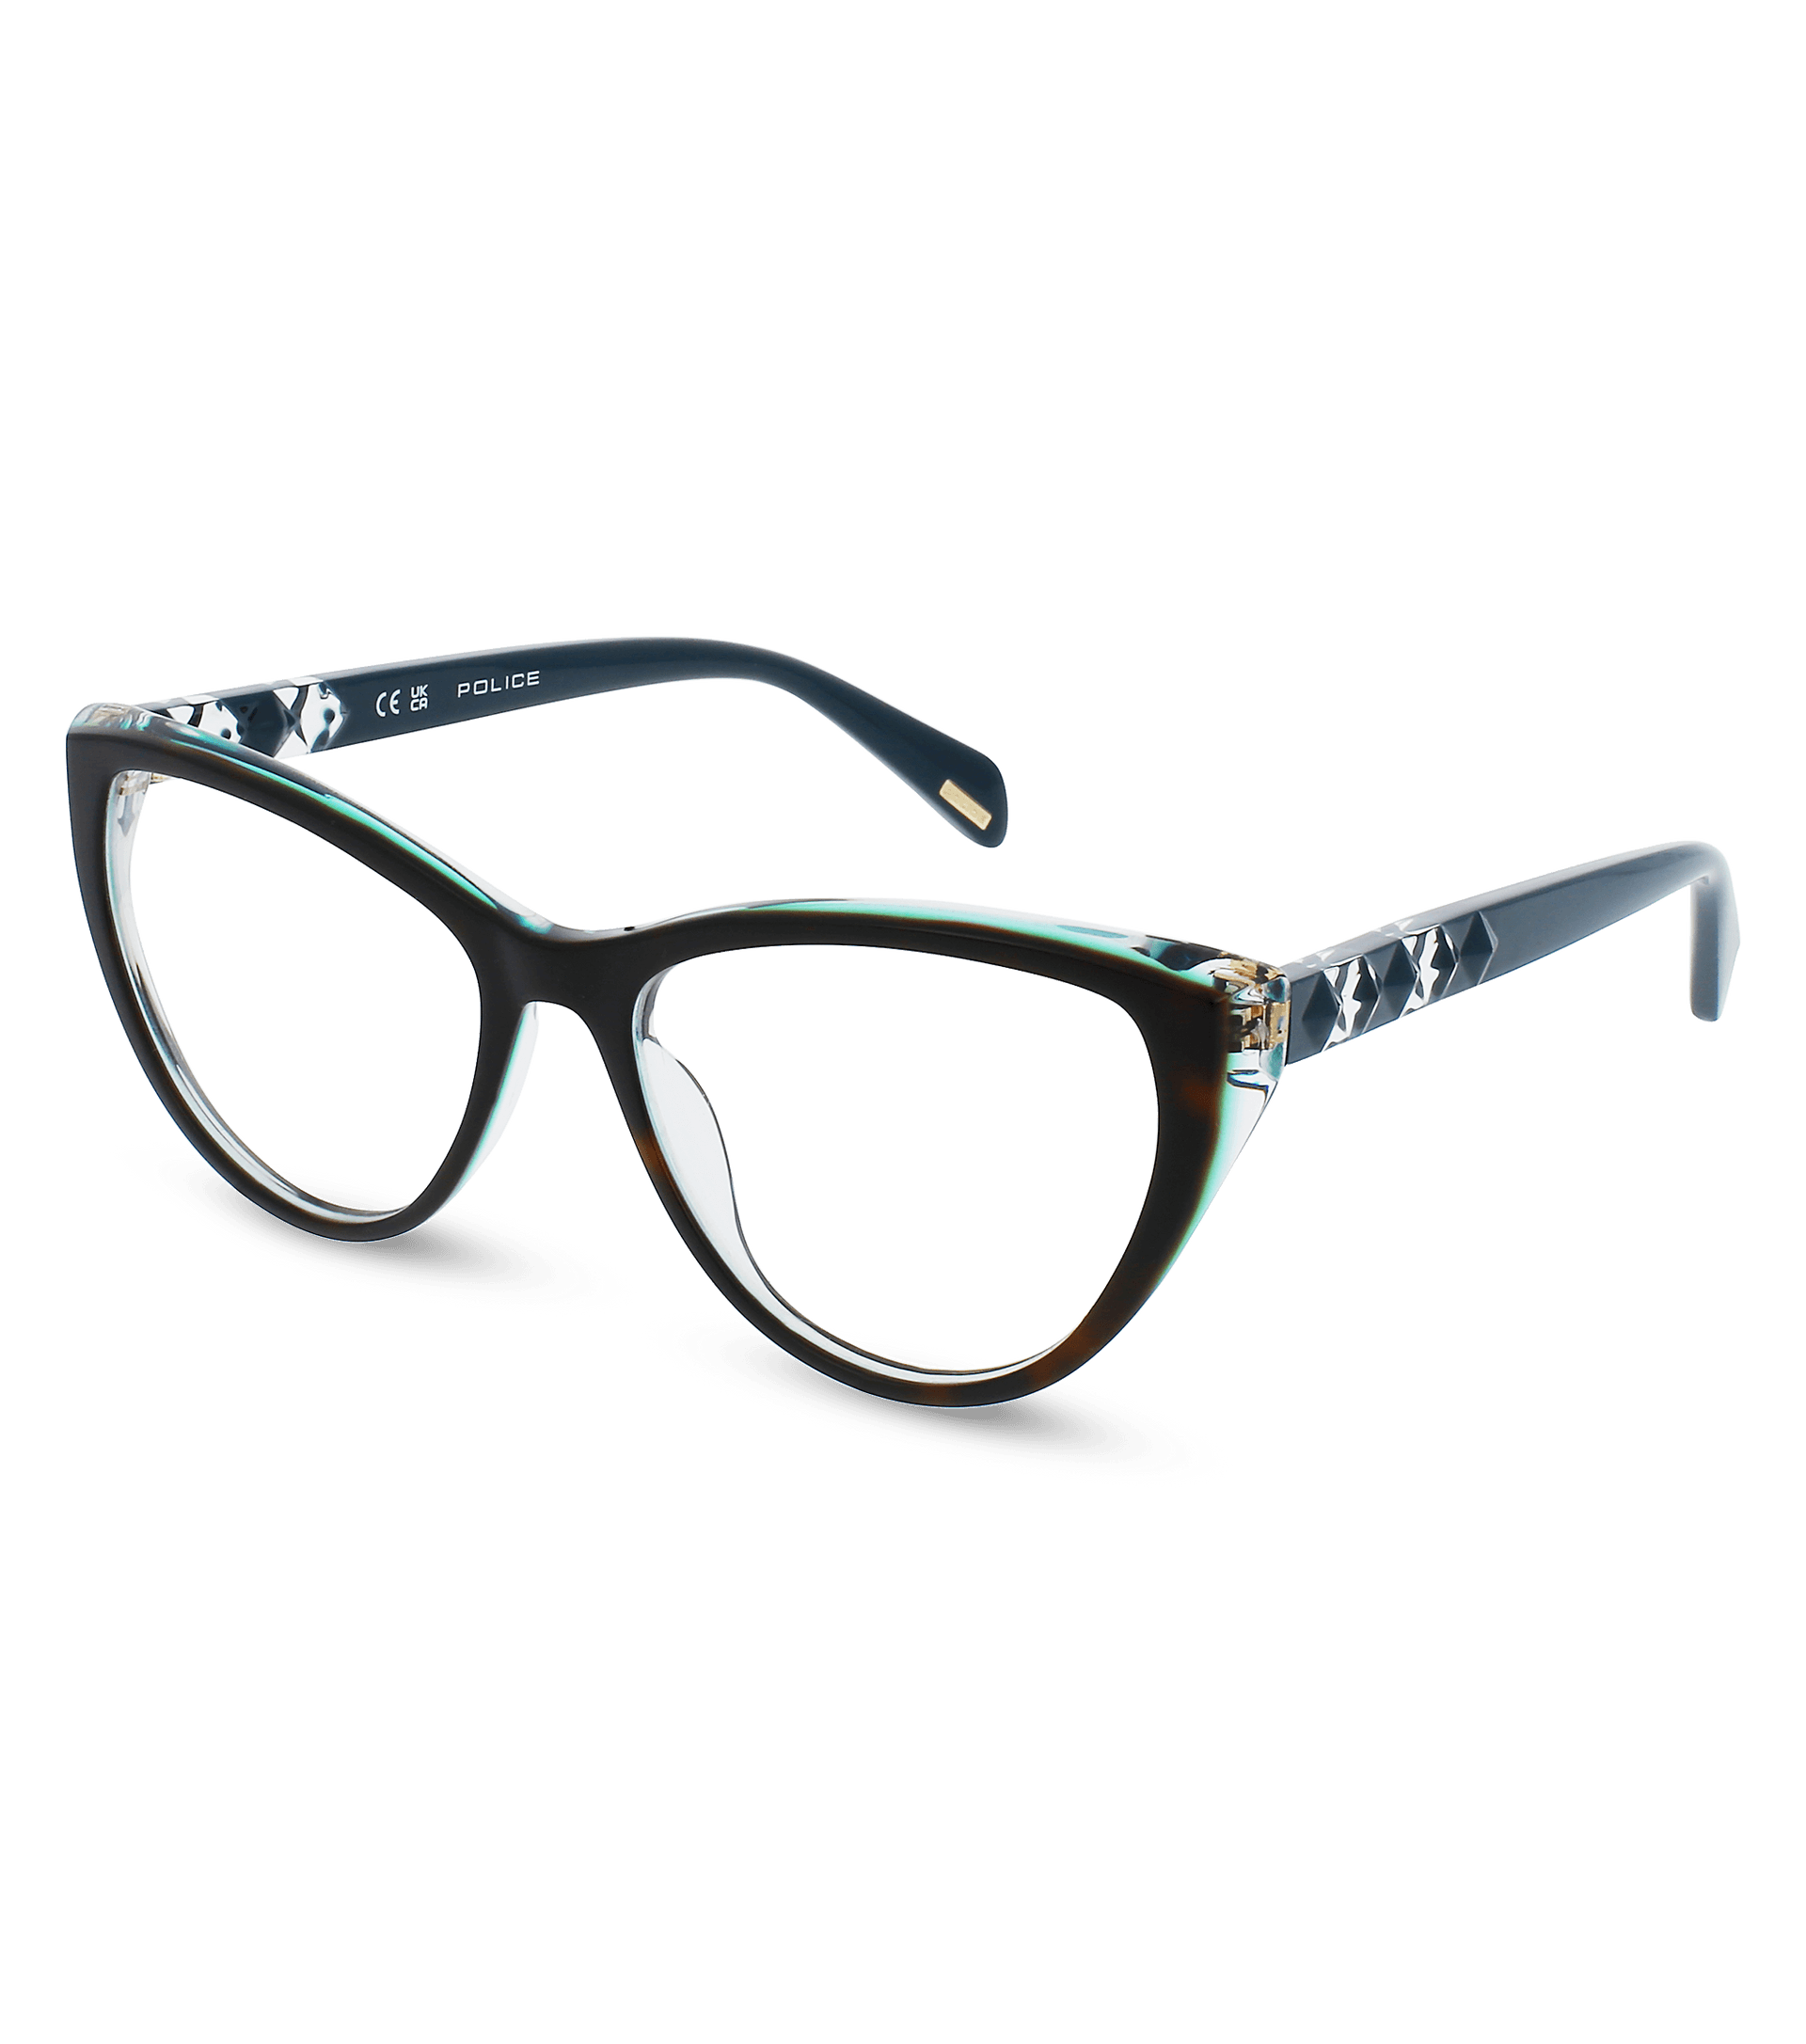 Police glasses - Hedron 3 Woman Eyeglasses Police VPLL31 Black